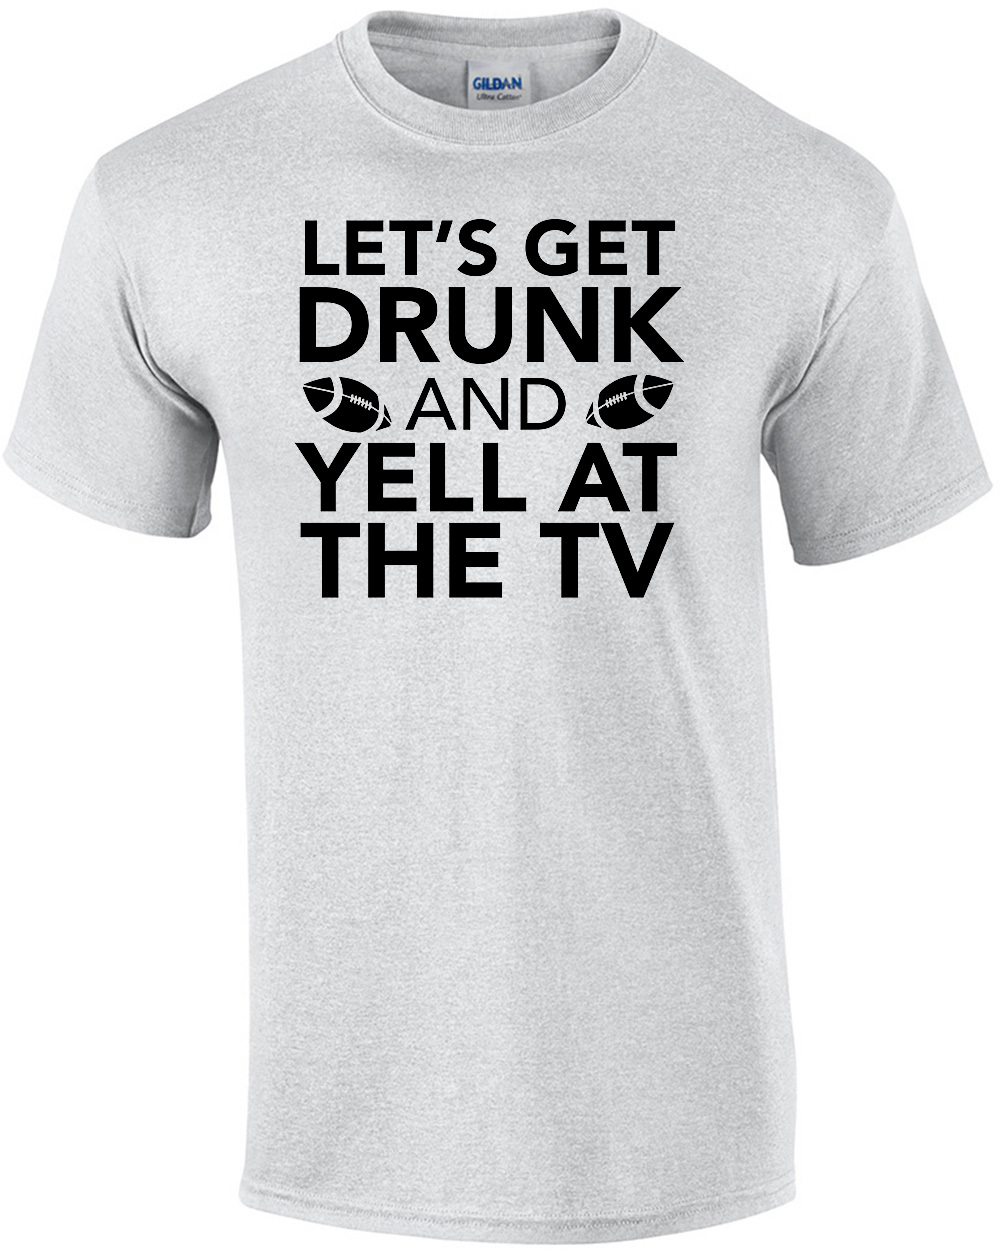 Ik zie je morgen uitspraak Onrecht Let's get drunk and yell at the TV - funny sports t-shirt | eBay